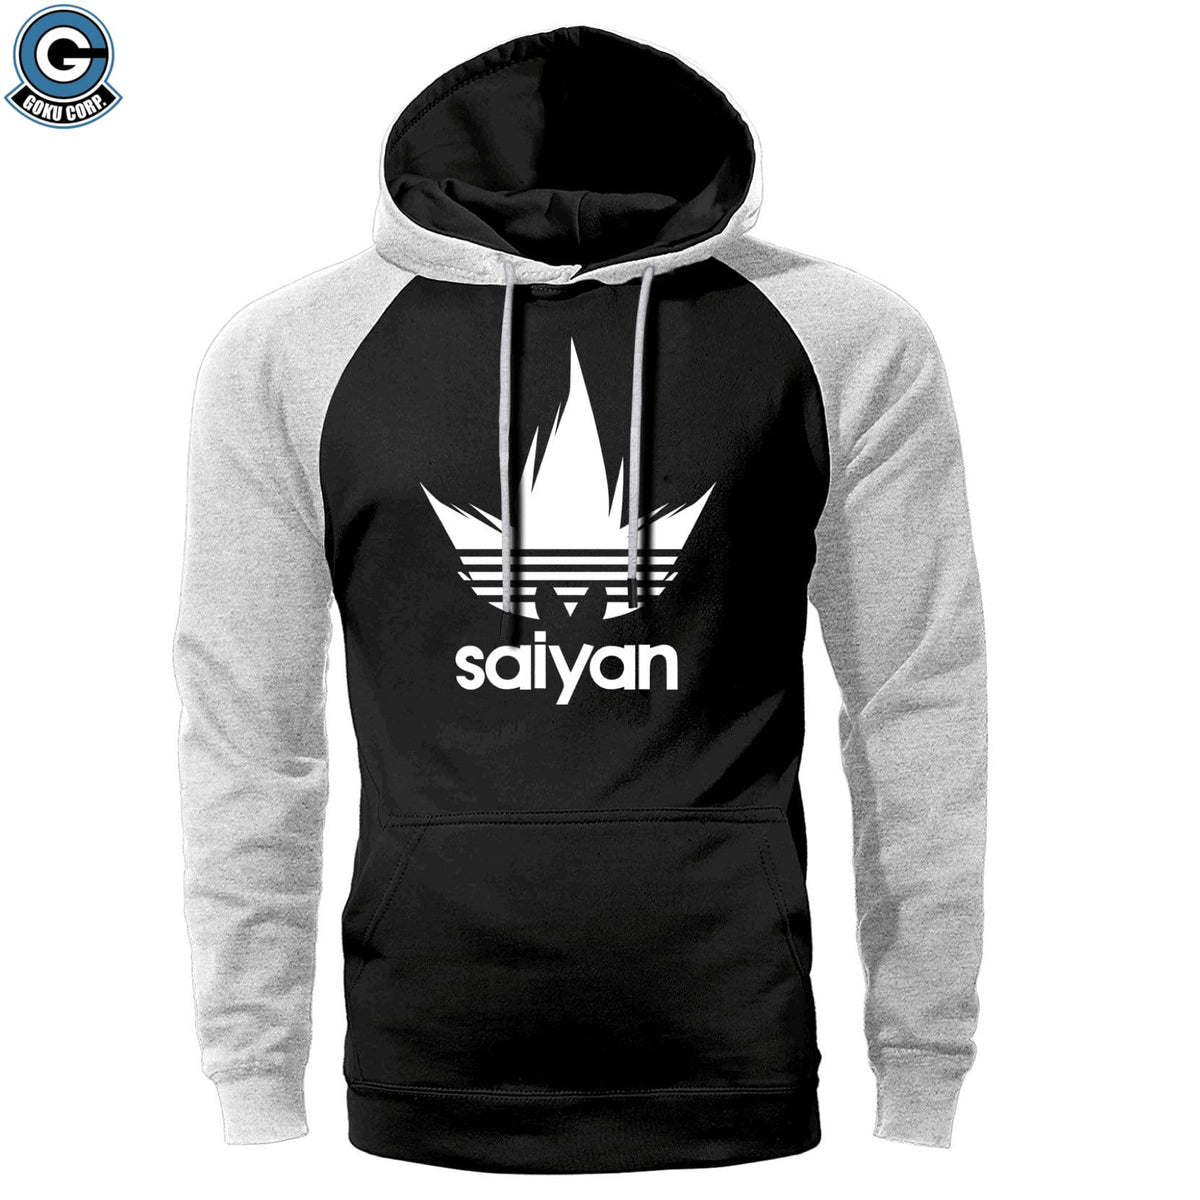 Saiyan adidas hoodie | Goku Corp